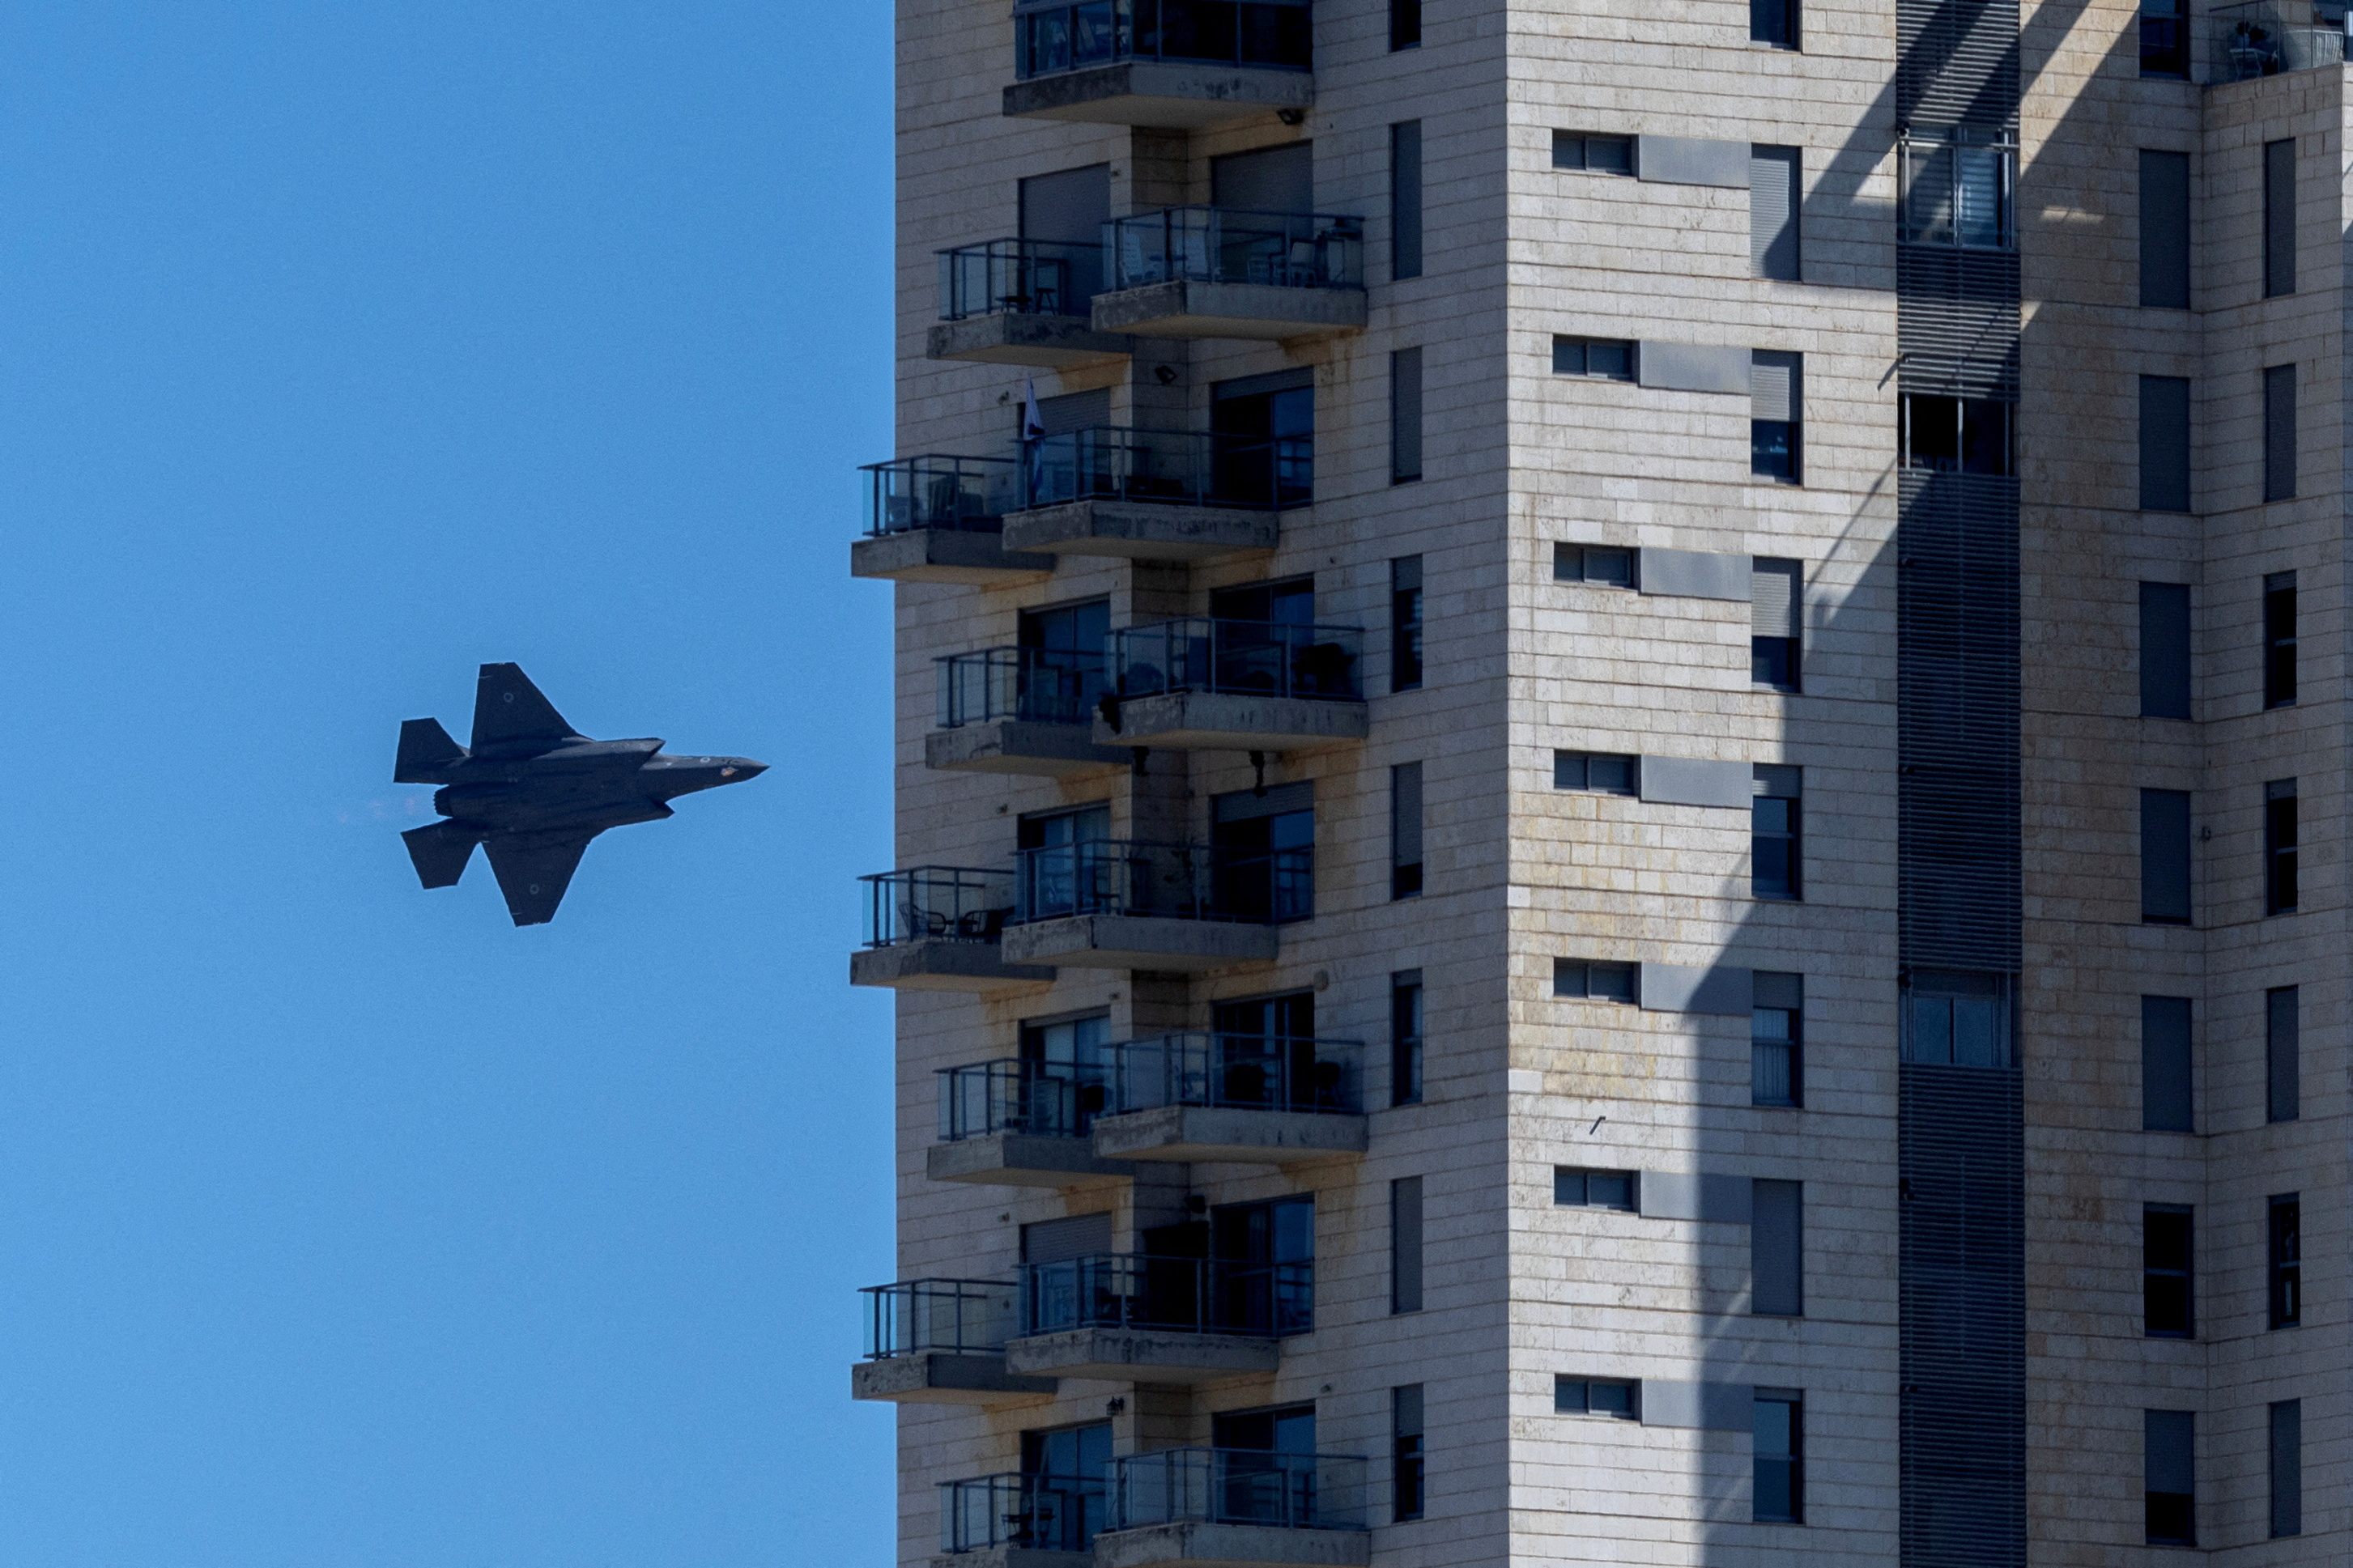 Israeli Air Force F-35 war jet flies over Jerusalem as part of celebrations